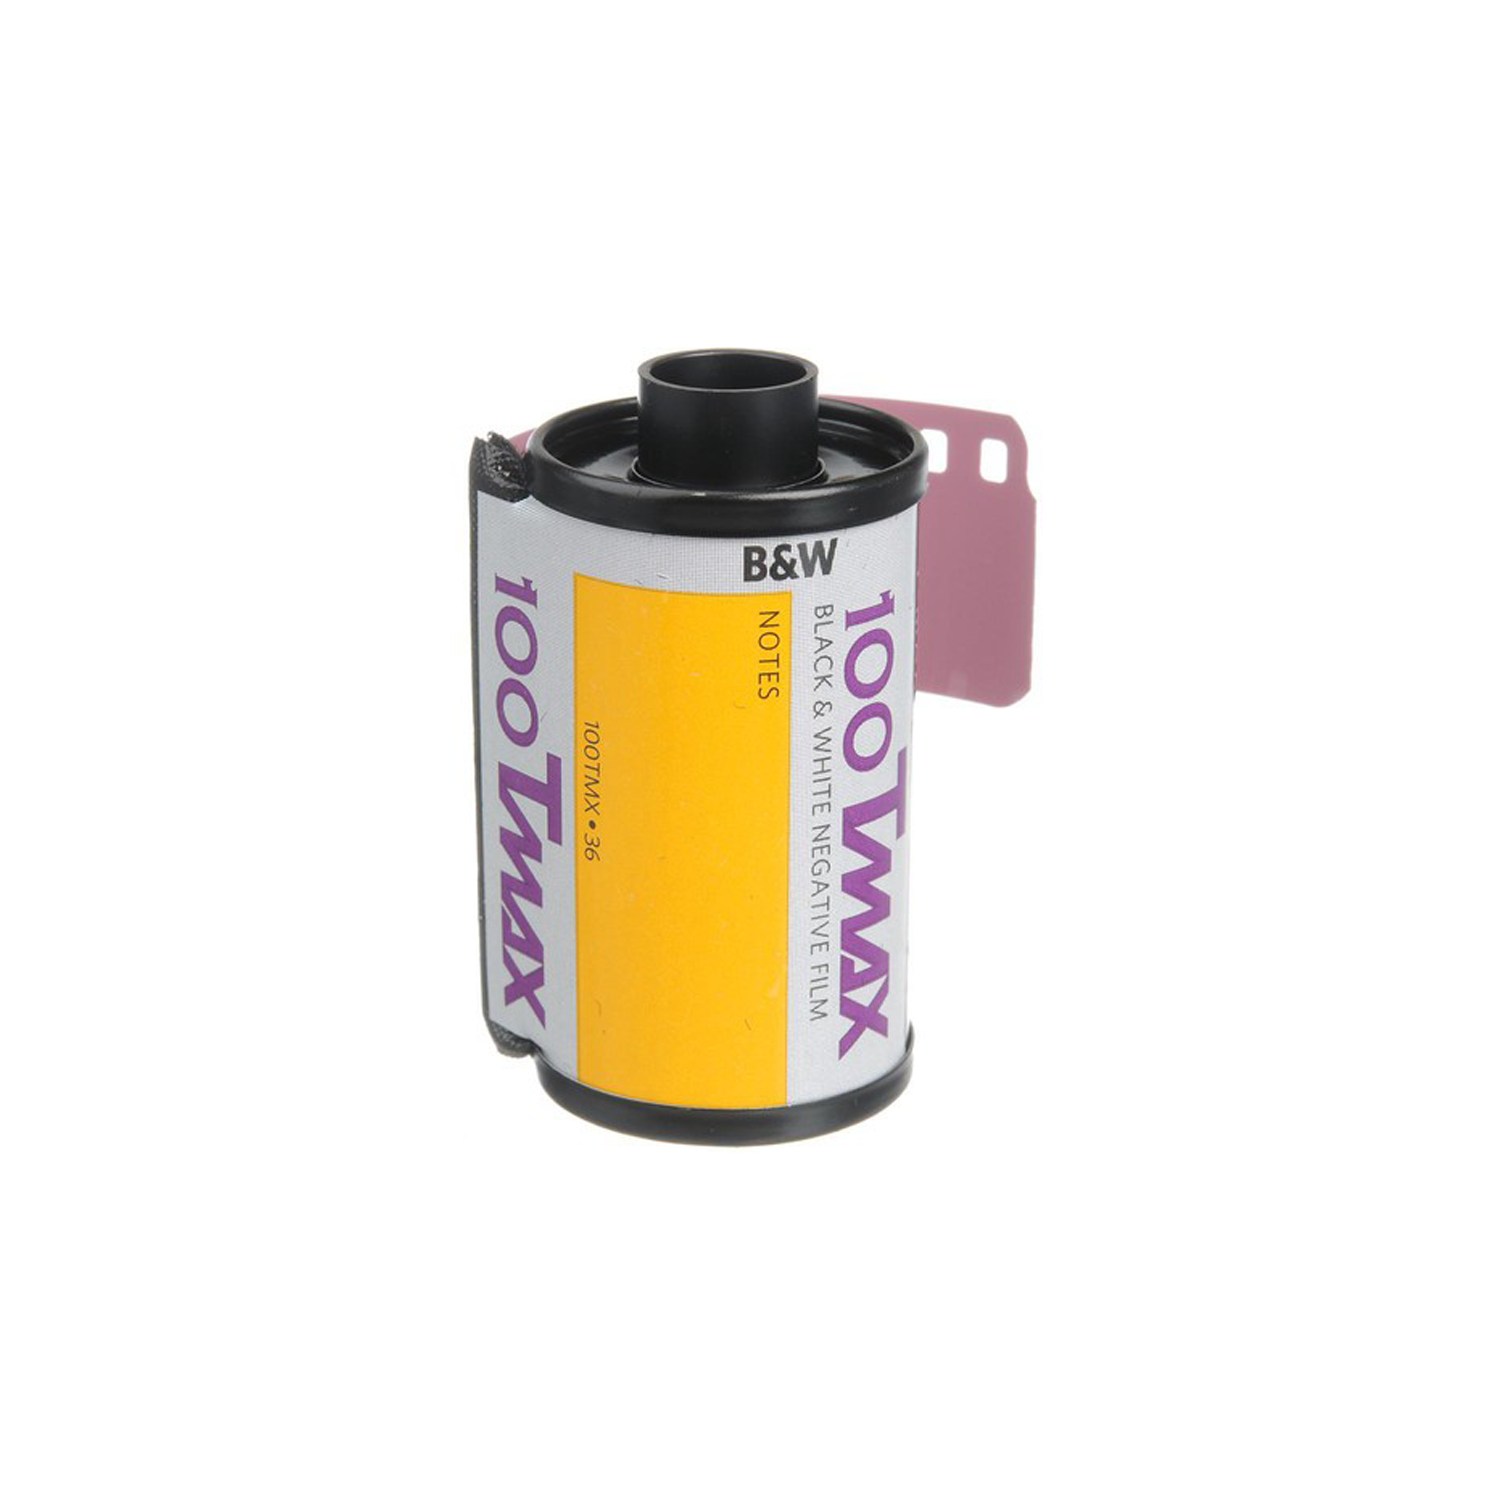 Kodak Professional T-Max 100 Film négatif noir et blanc - Film de 35 mm - 36 expositions